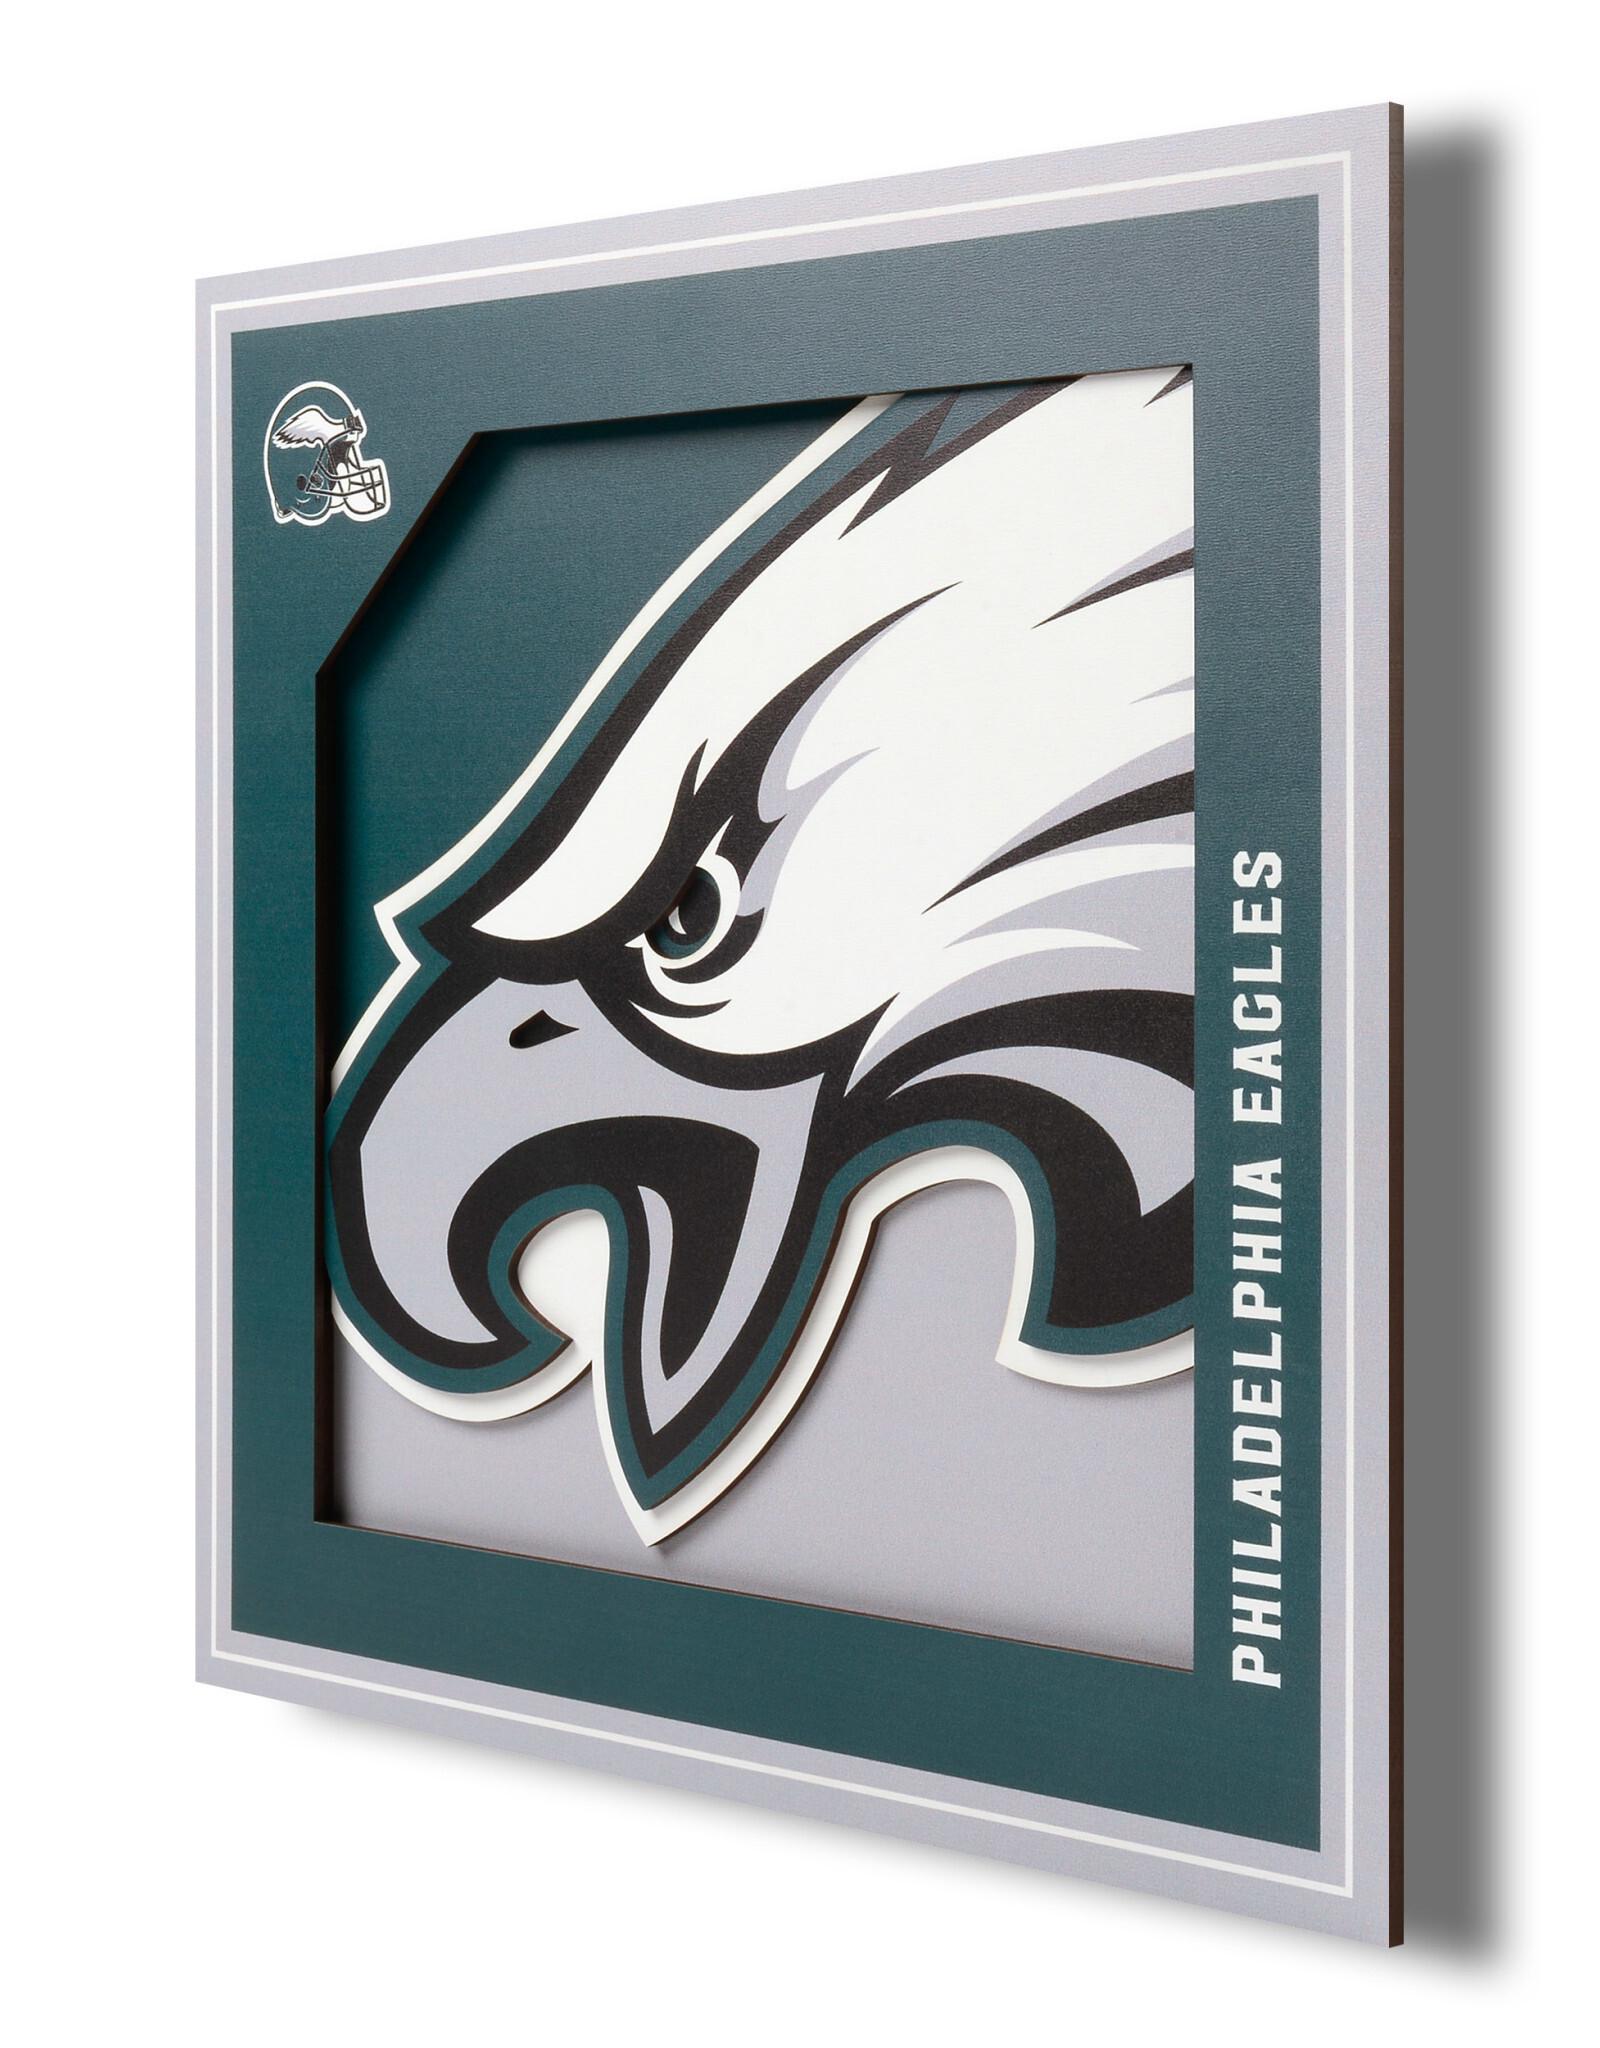 YOU THE FAN Philadelphia Eagles 3D Logo Series 12x12 Wall Art